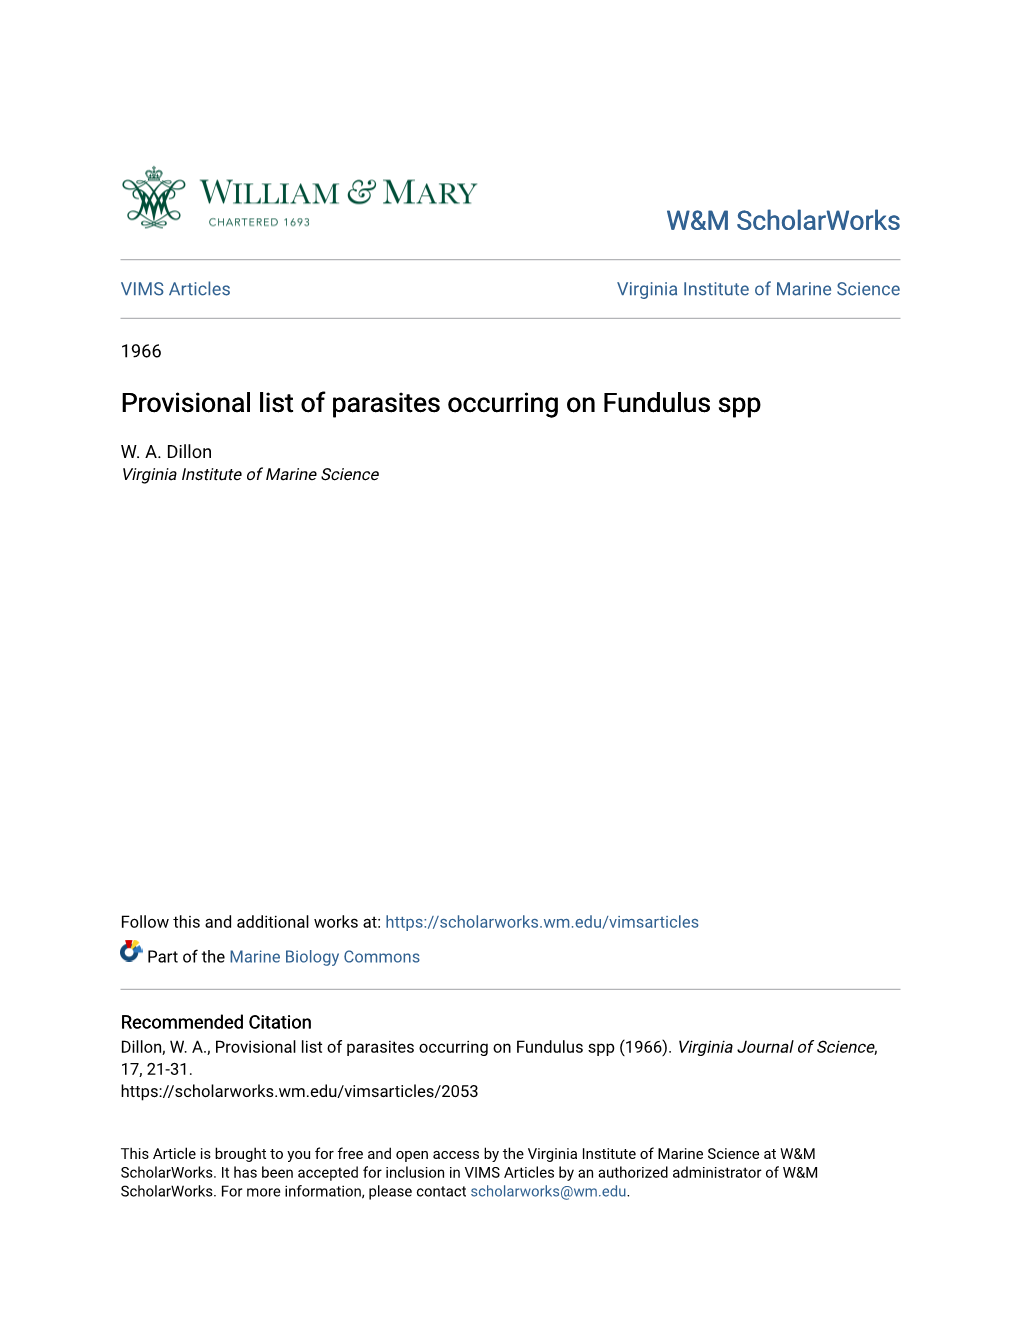 Provisional List of Parasites Occurring on Fundulus Spp